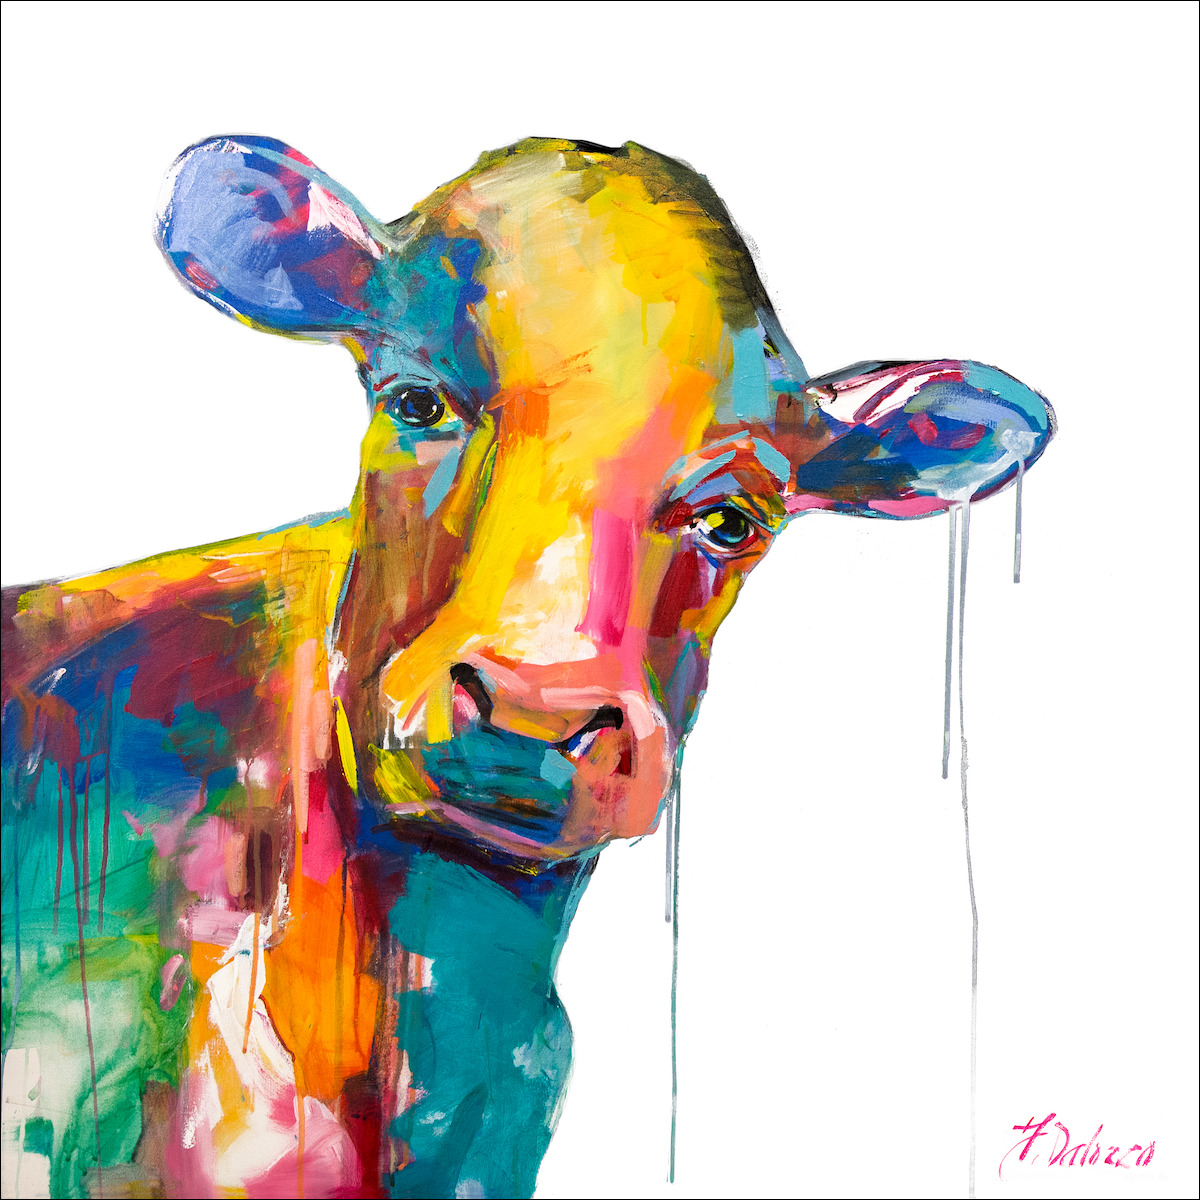 Fluro Animal Animal "Cows with Attitude 1" On White Variant From Judith Dalozzo Artwork